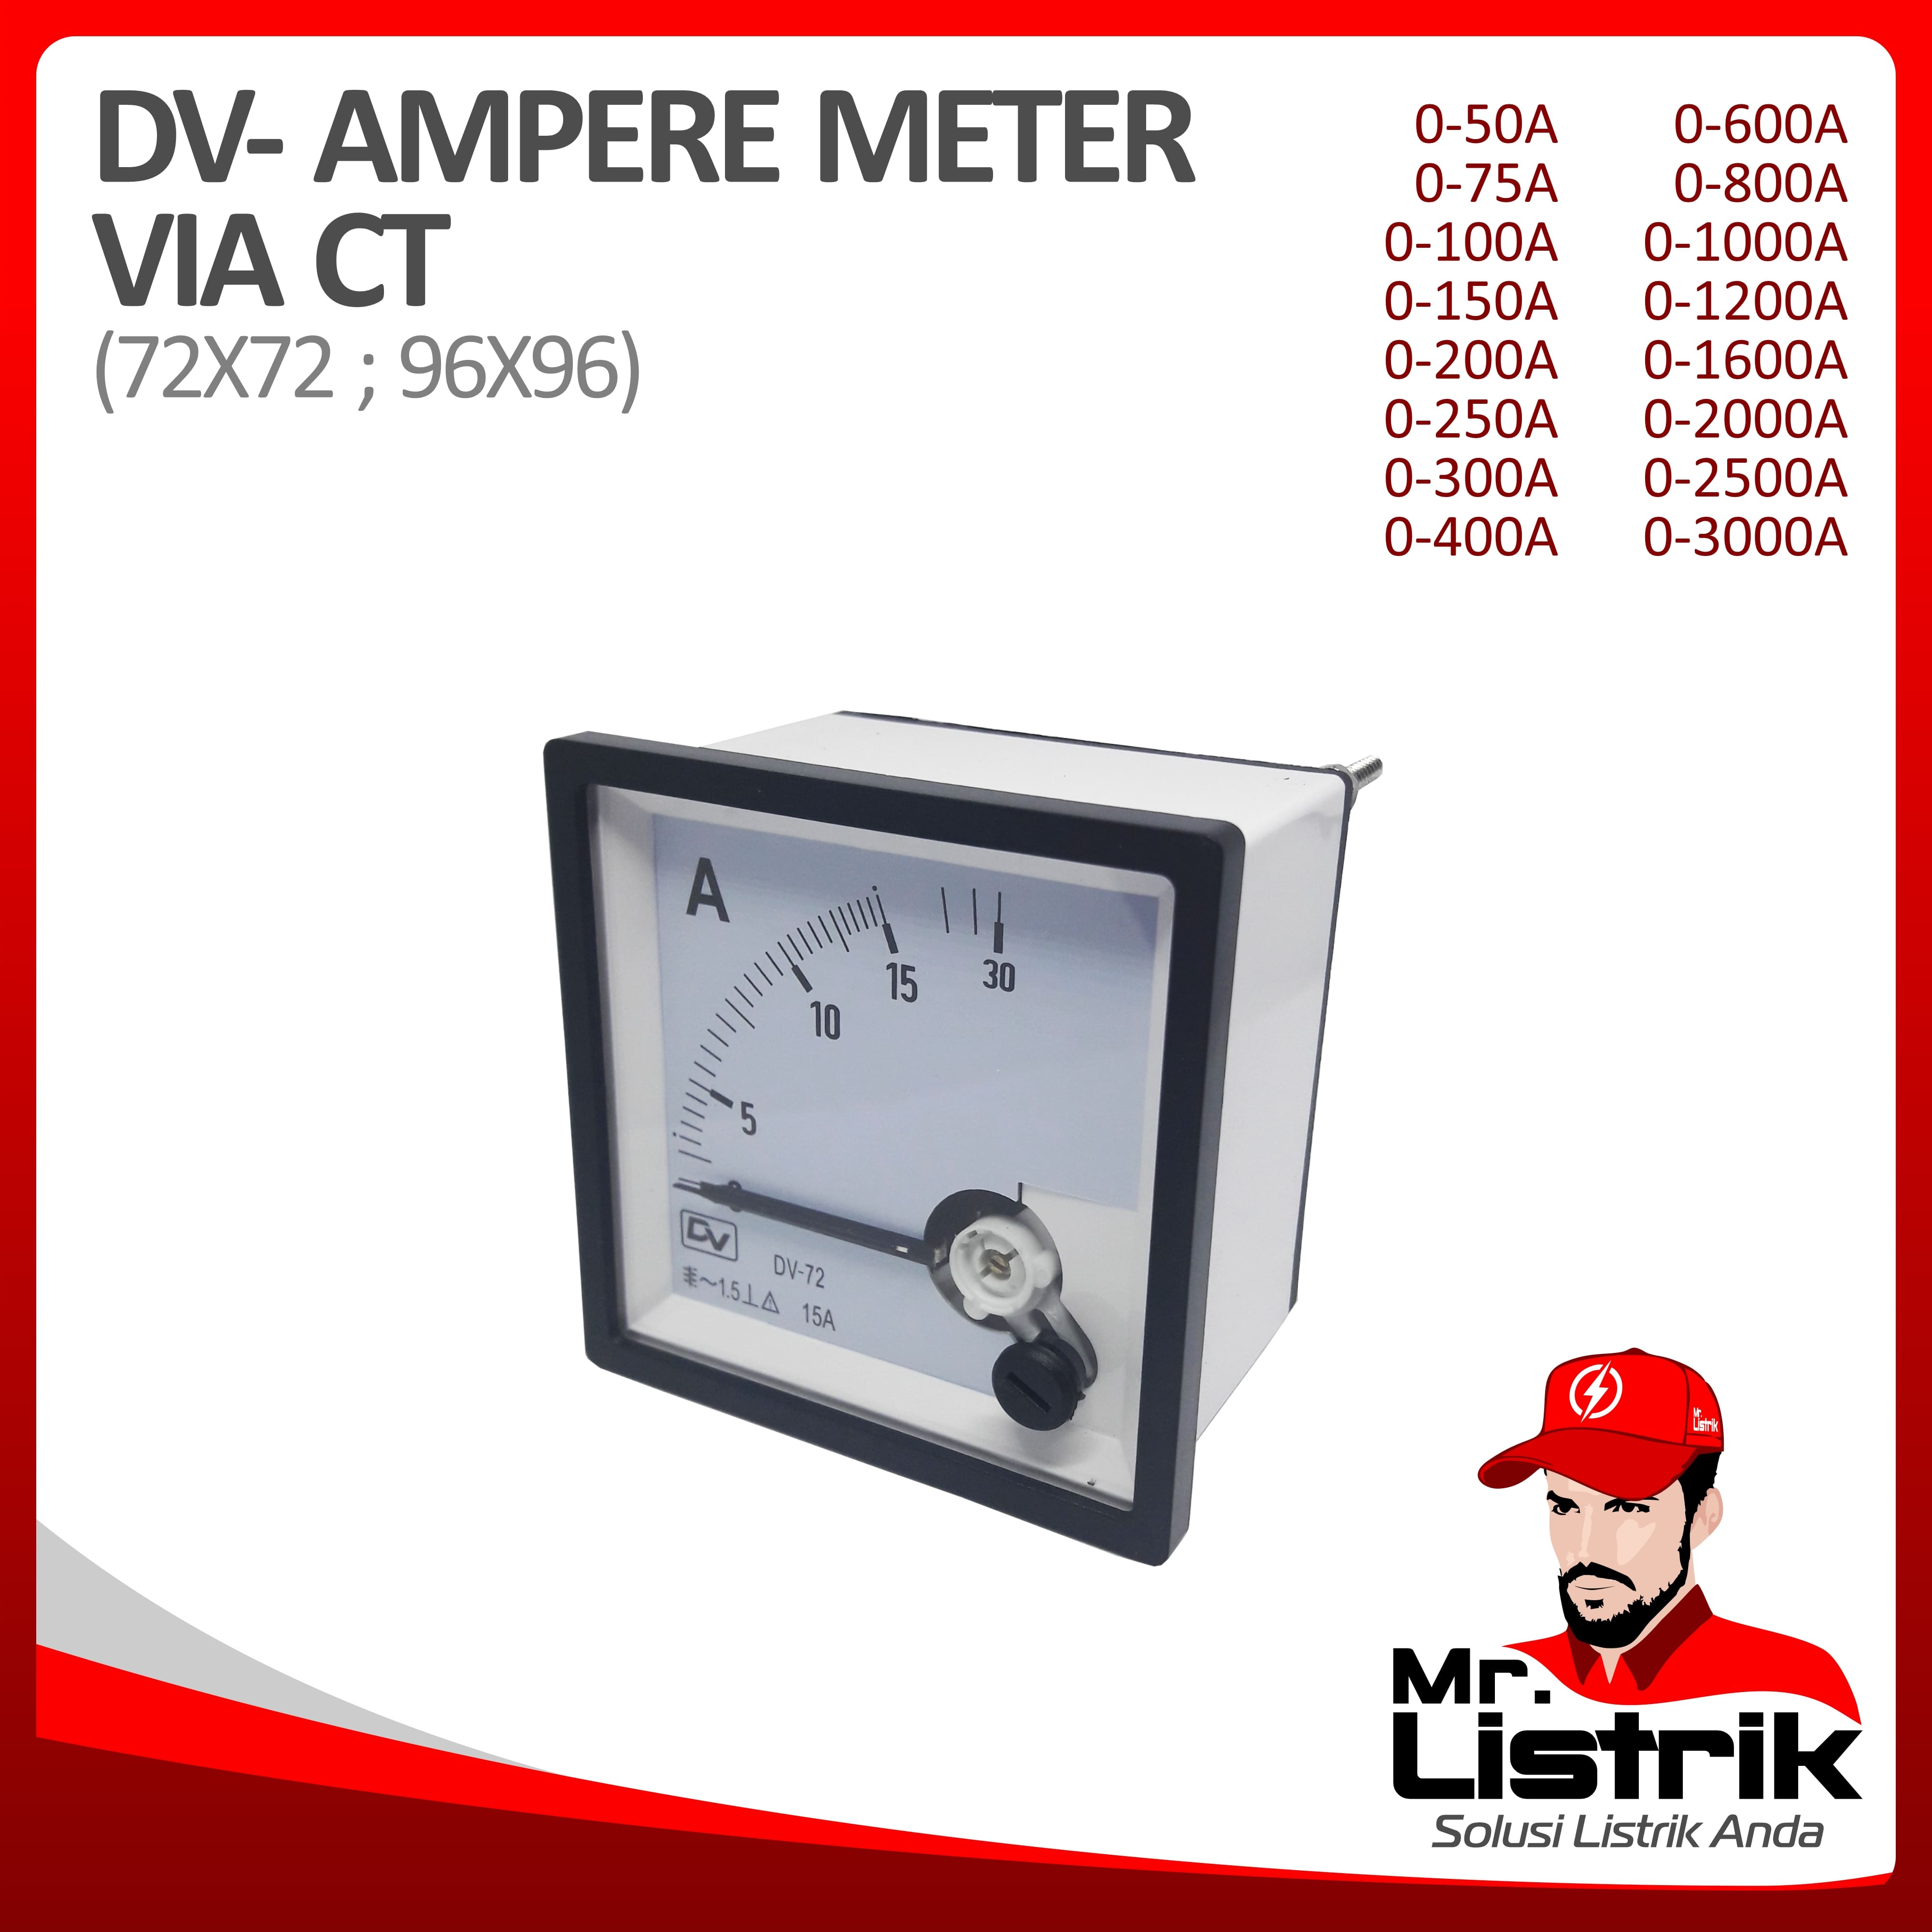 Amperemeter Via CT DV 96x96 - 800A